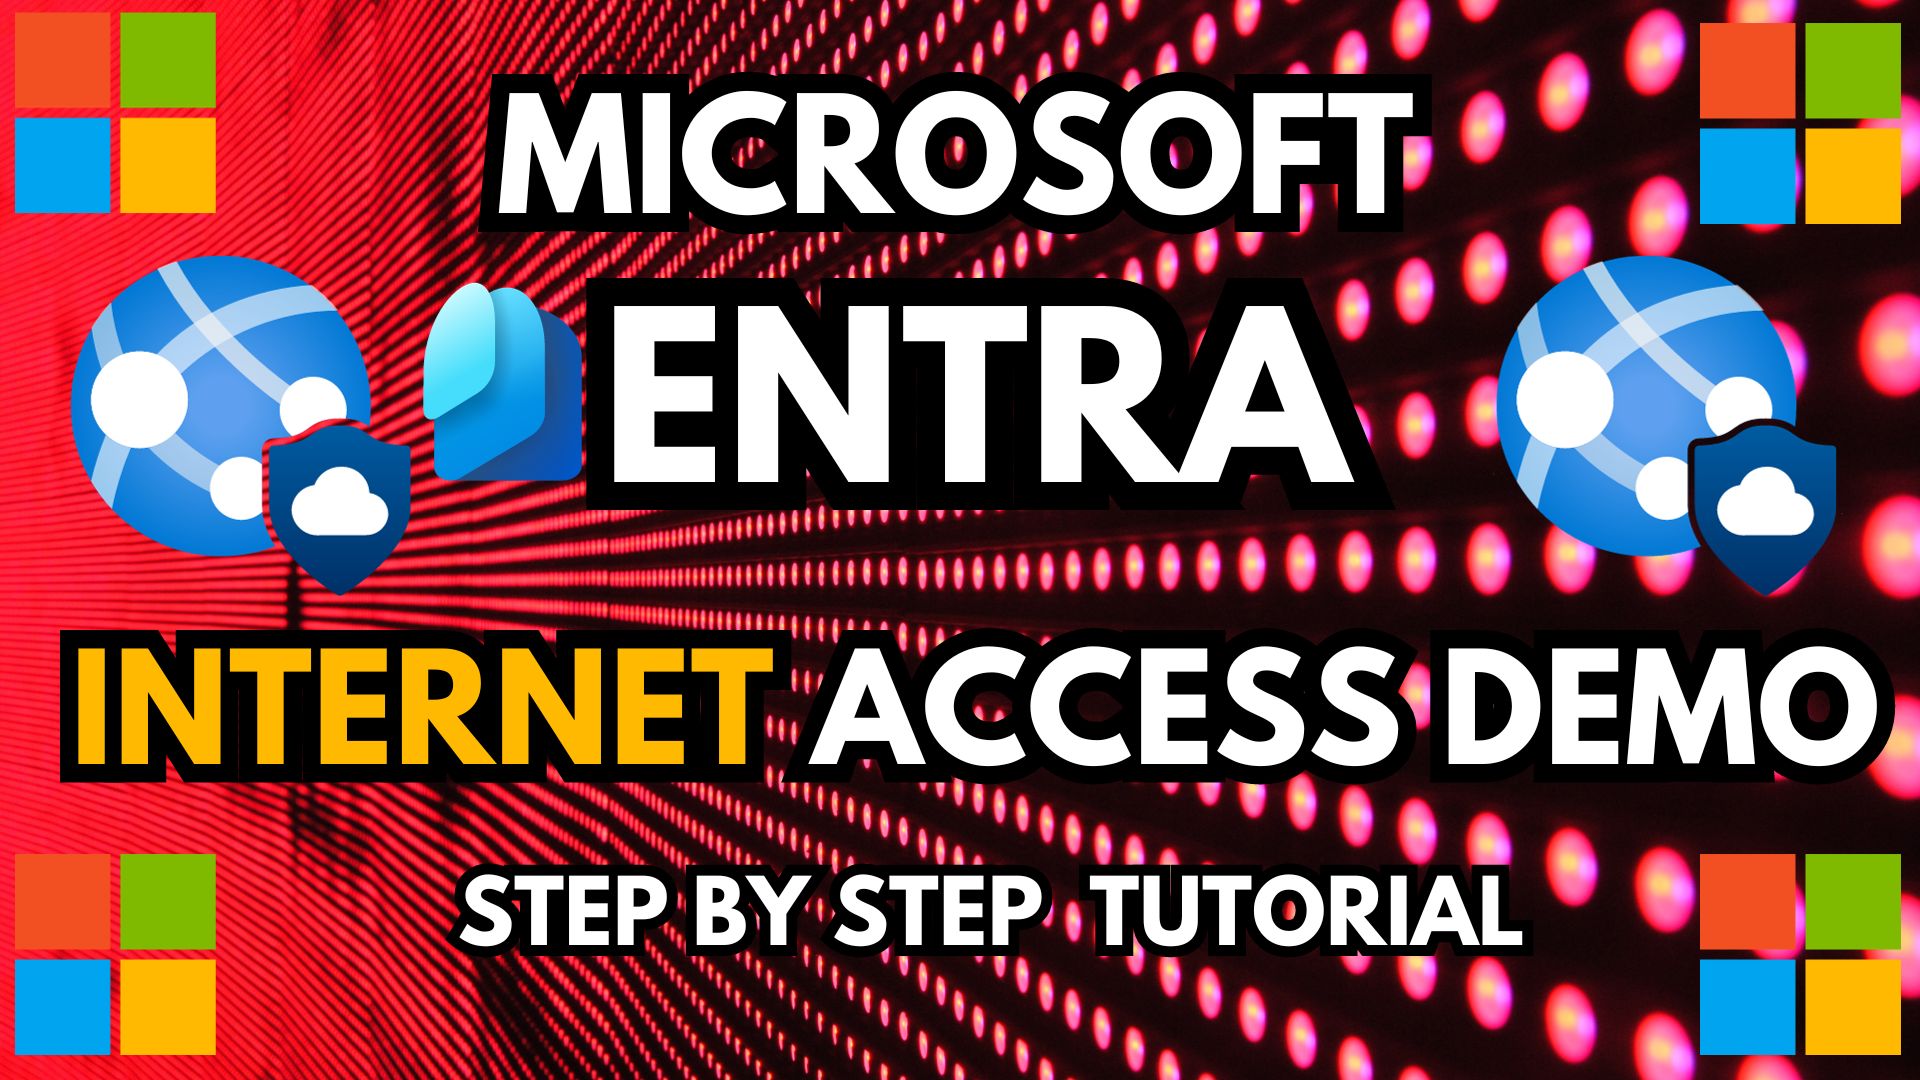 Microsoft Entra Internet Access